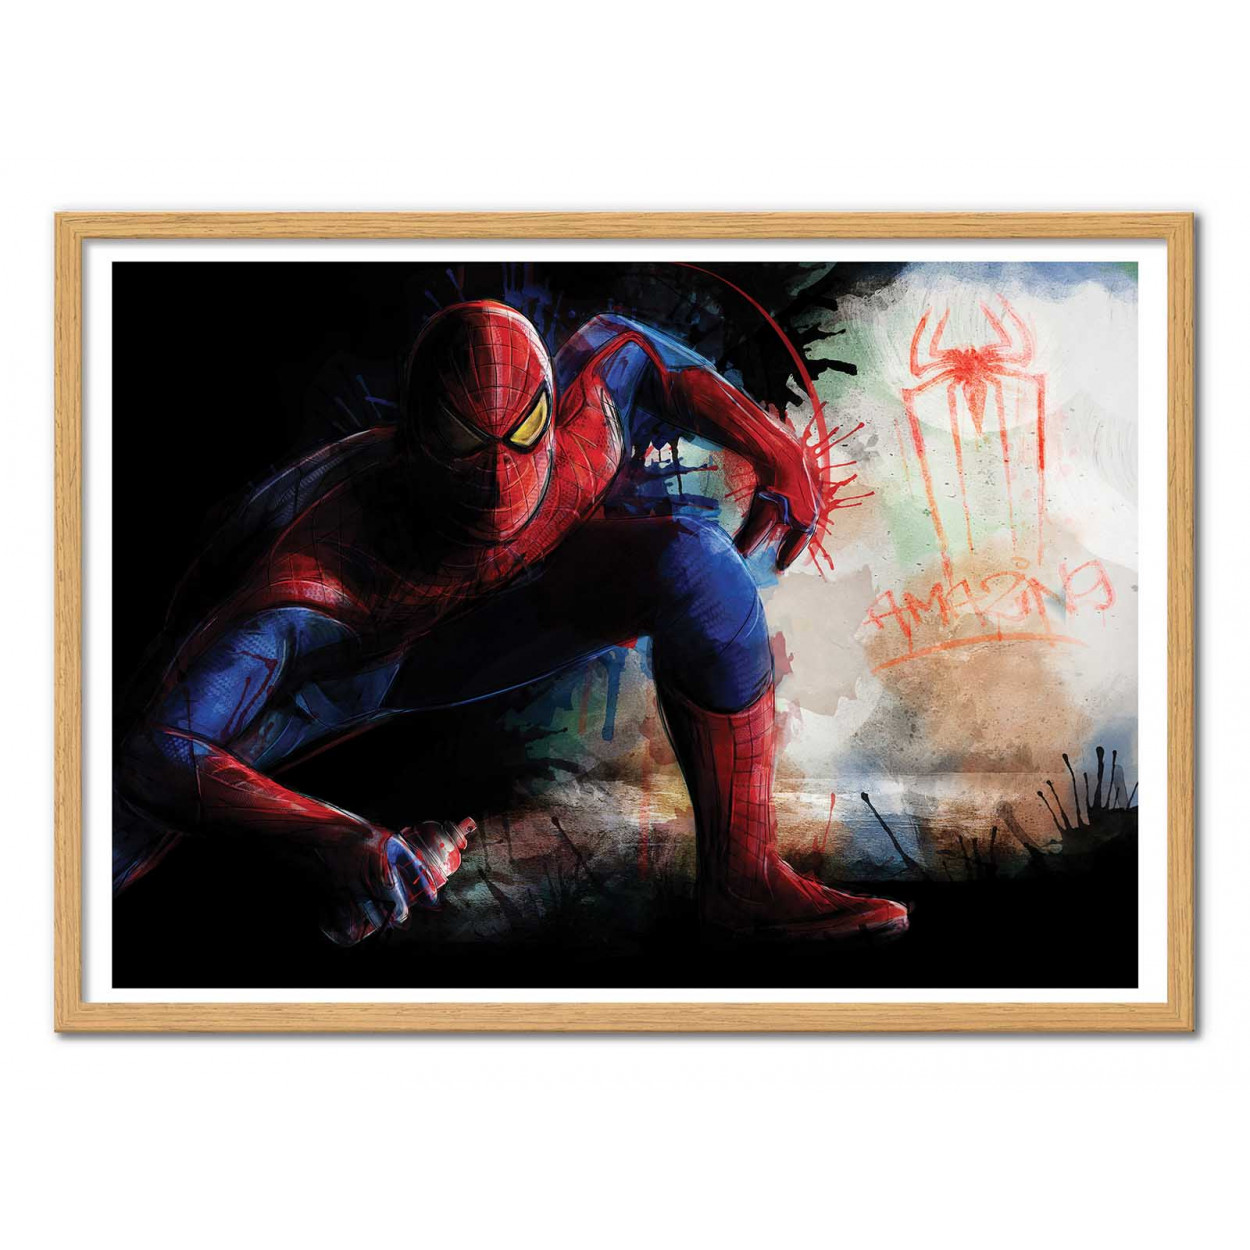 https://www.walleditions.com/16943-thickbox_default/art-poster-spiderman-spray-tag-barrett-biggers.jpg